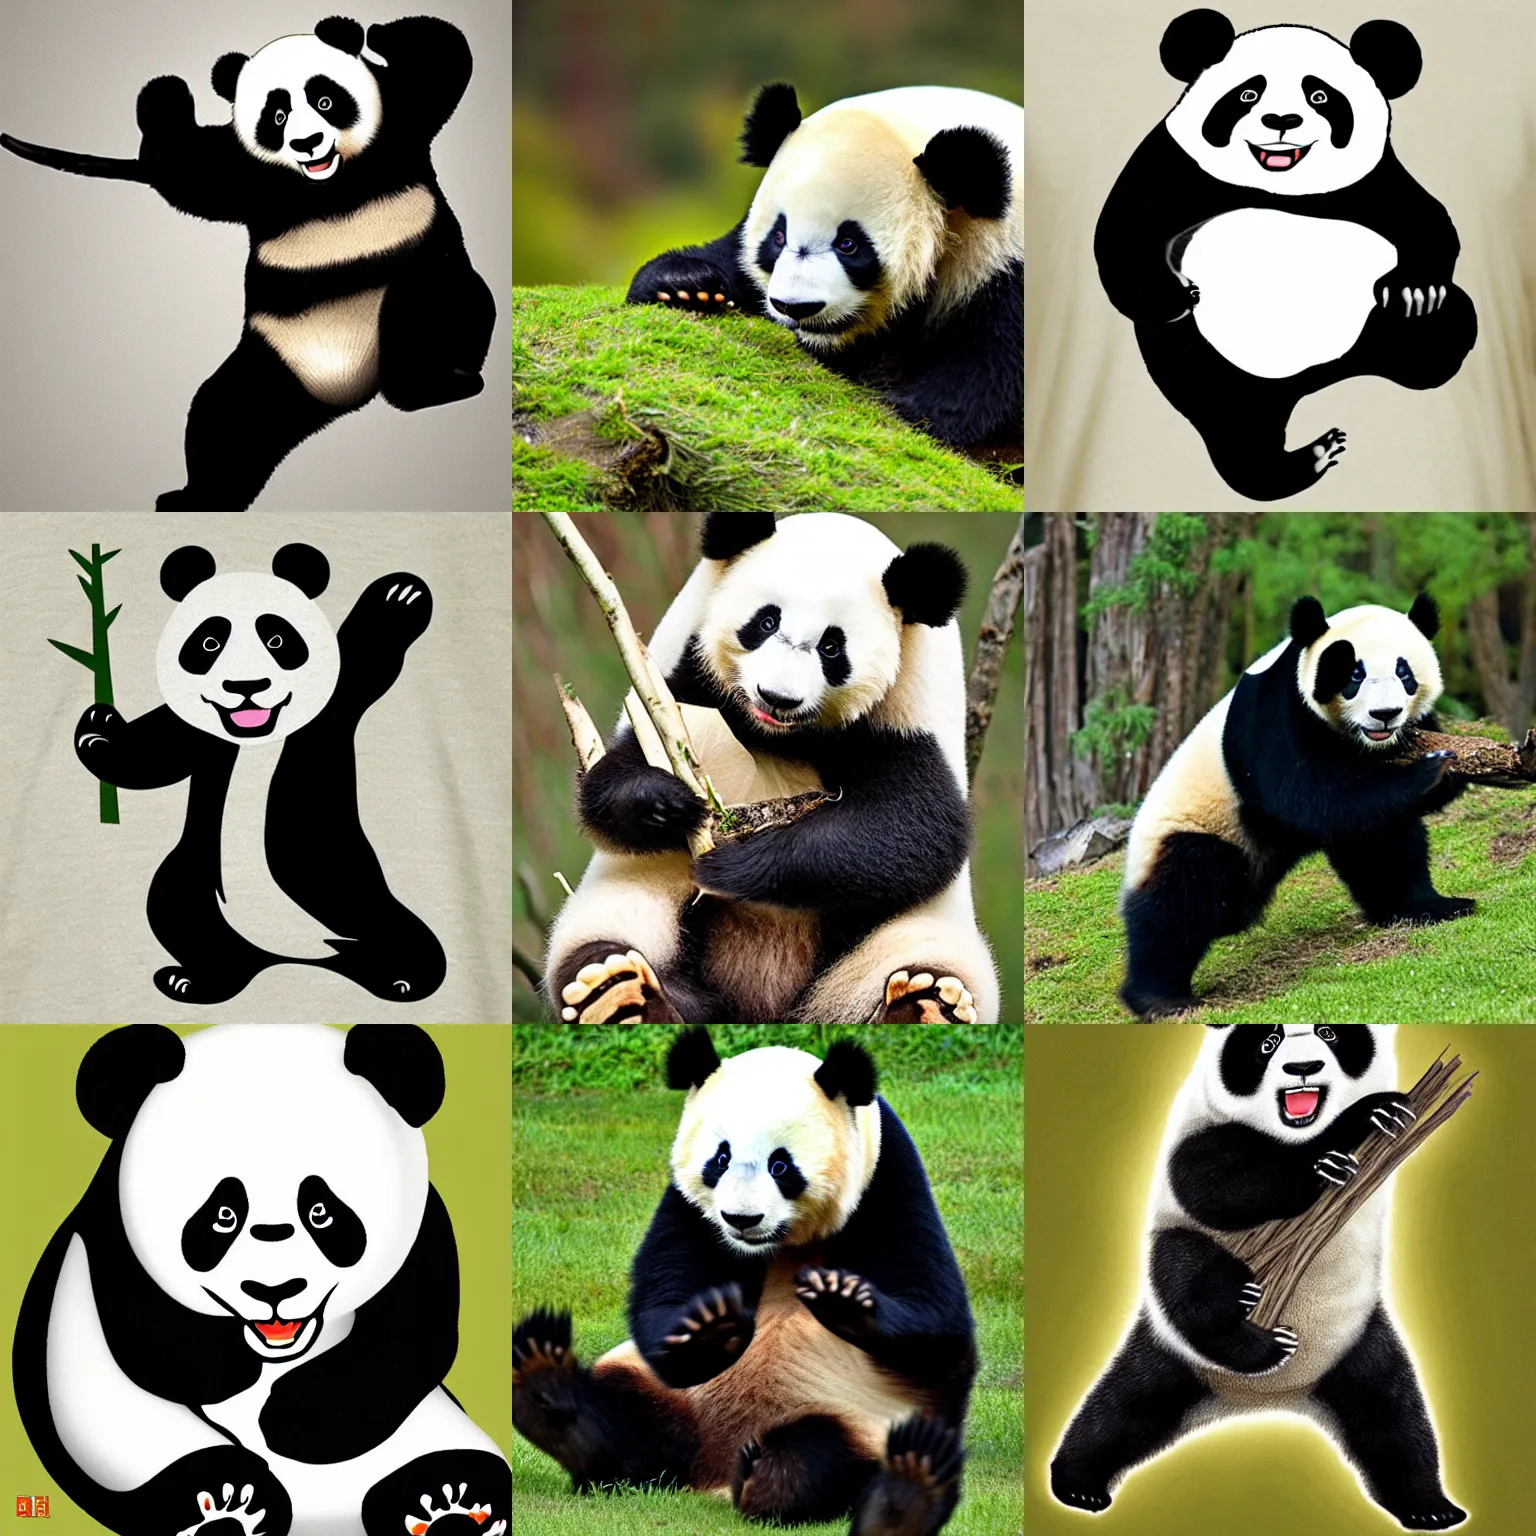 Prompt: crazy panda